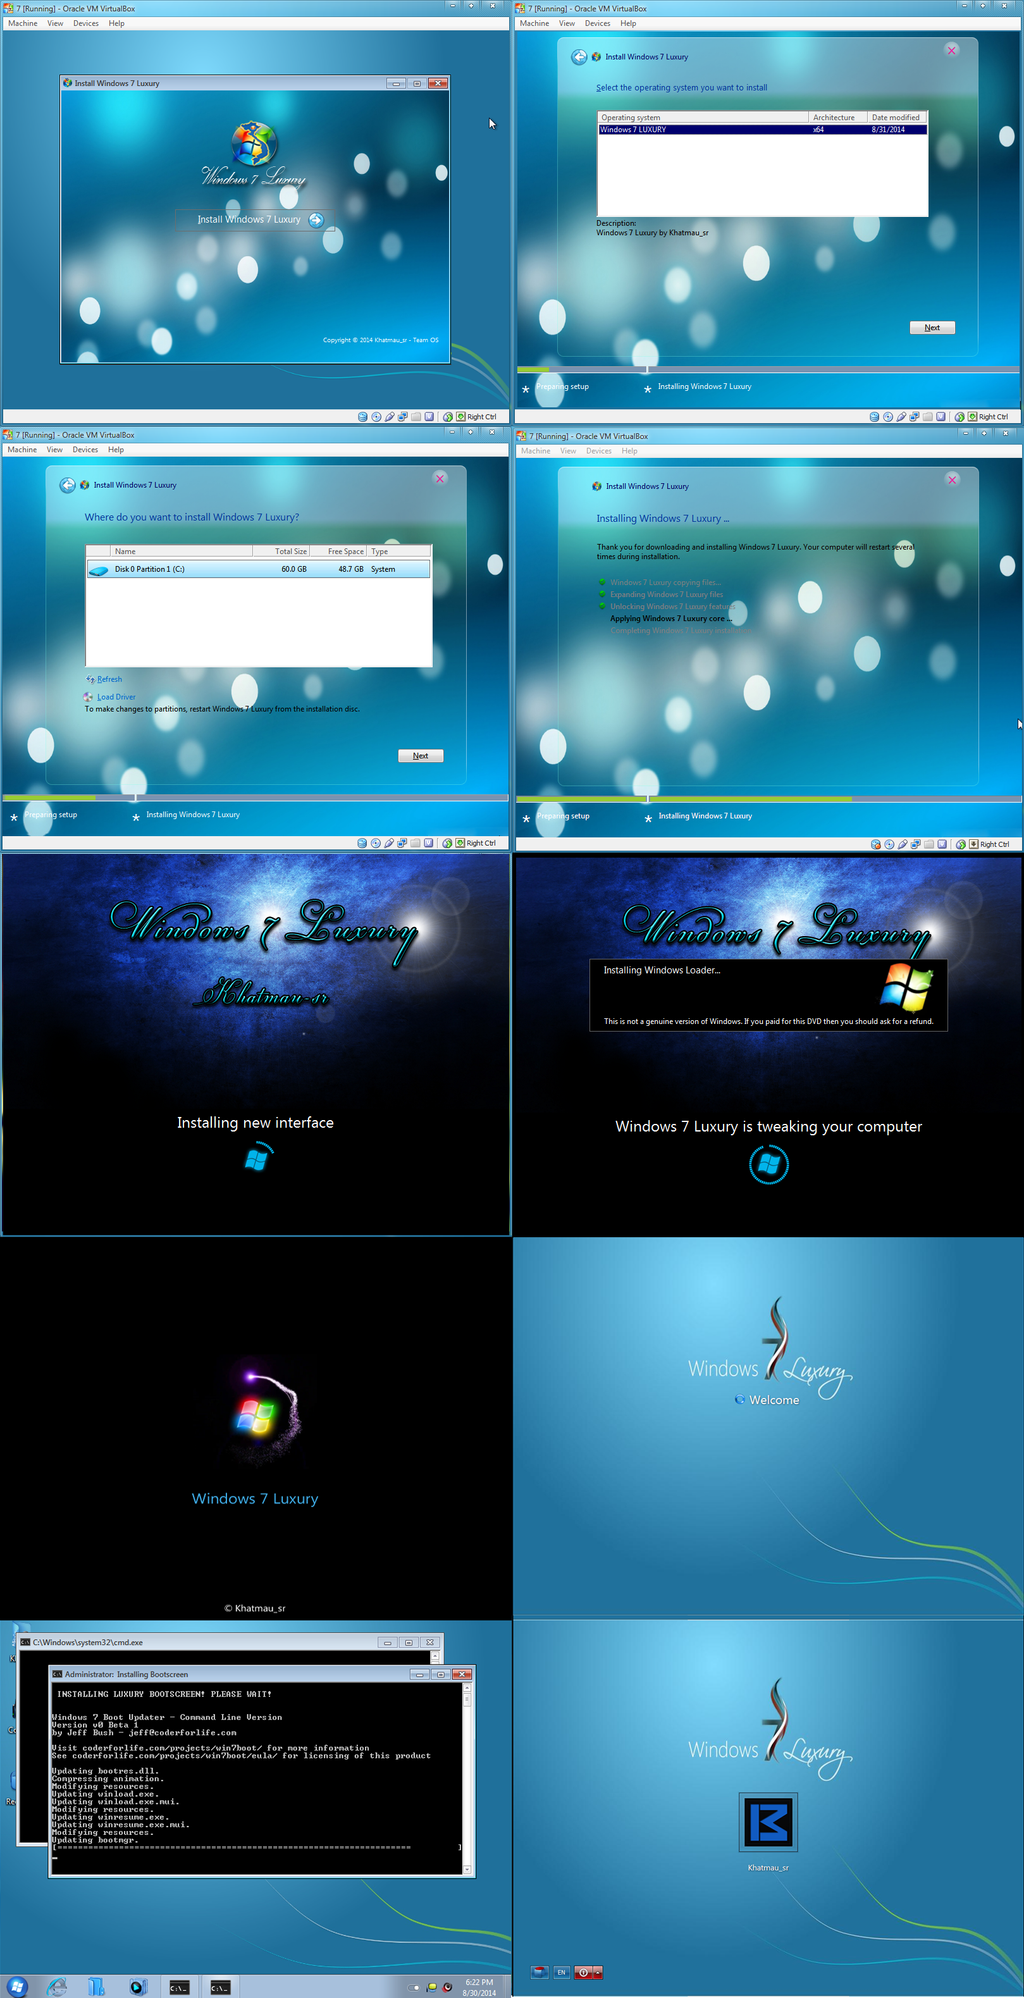 http://fc06.deviantart.net/fs70/i/2014/237/0/6/windows_7_luxury_setup_by_khatmau-d6gojga.png